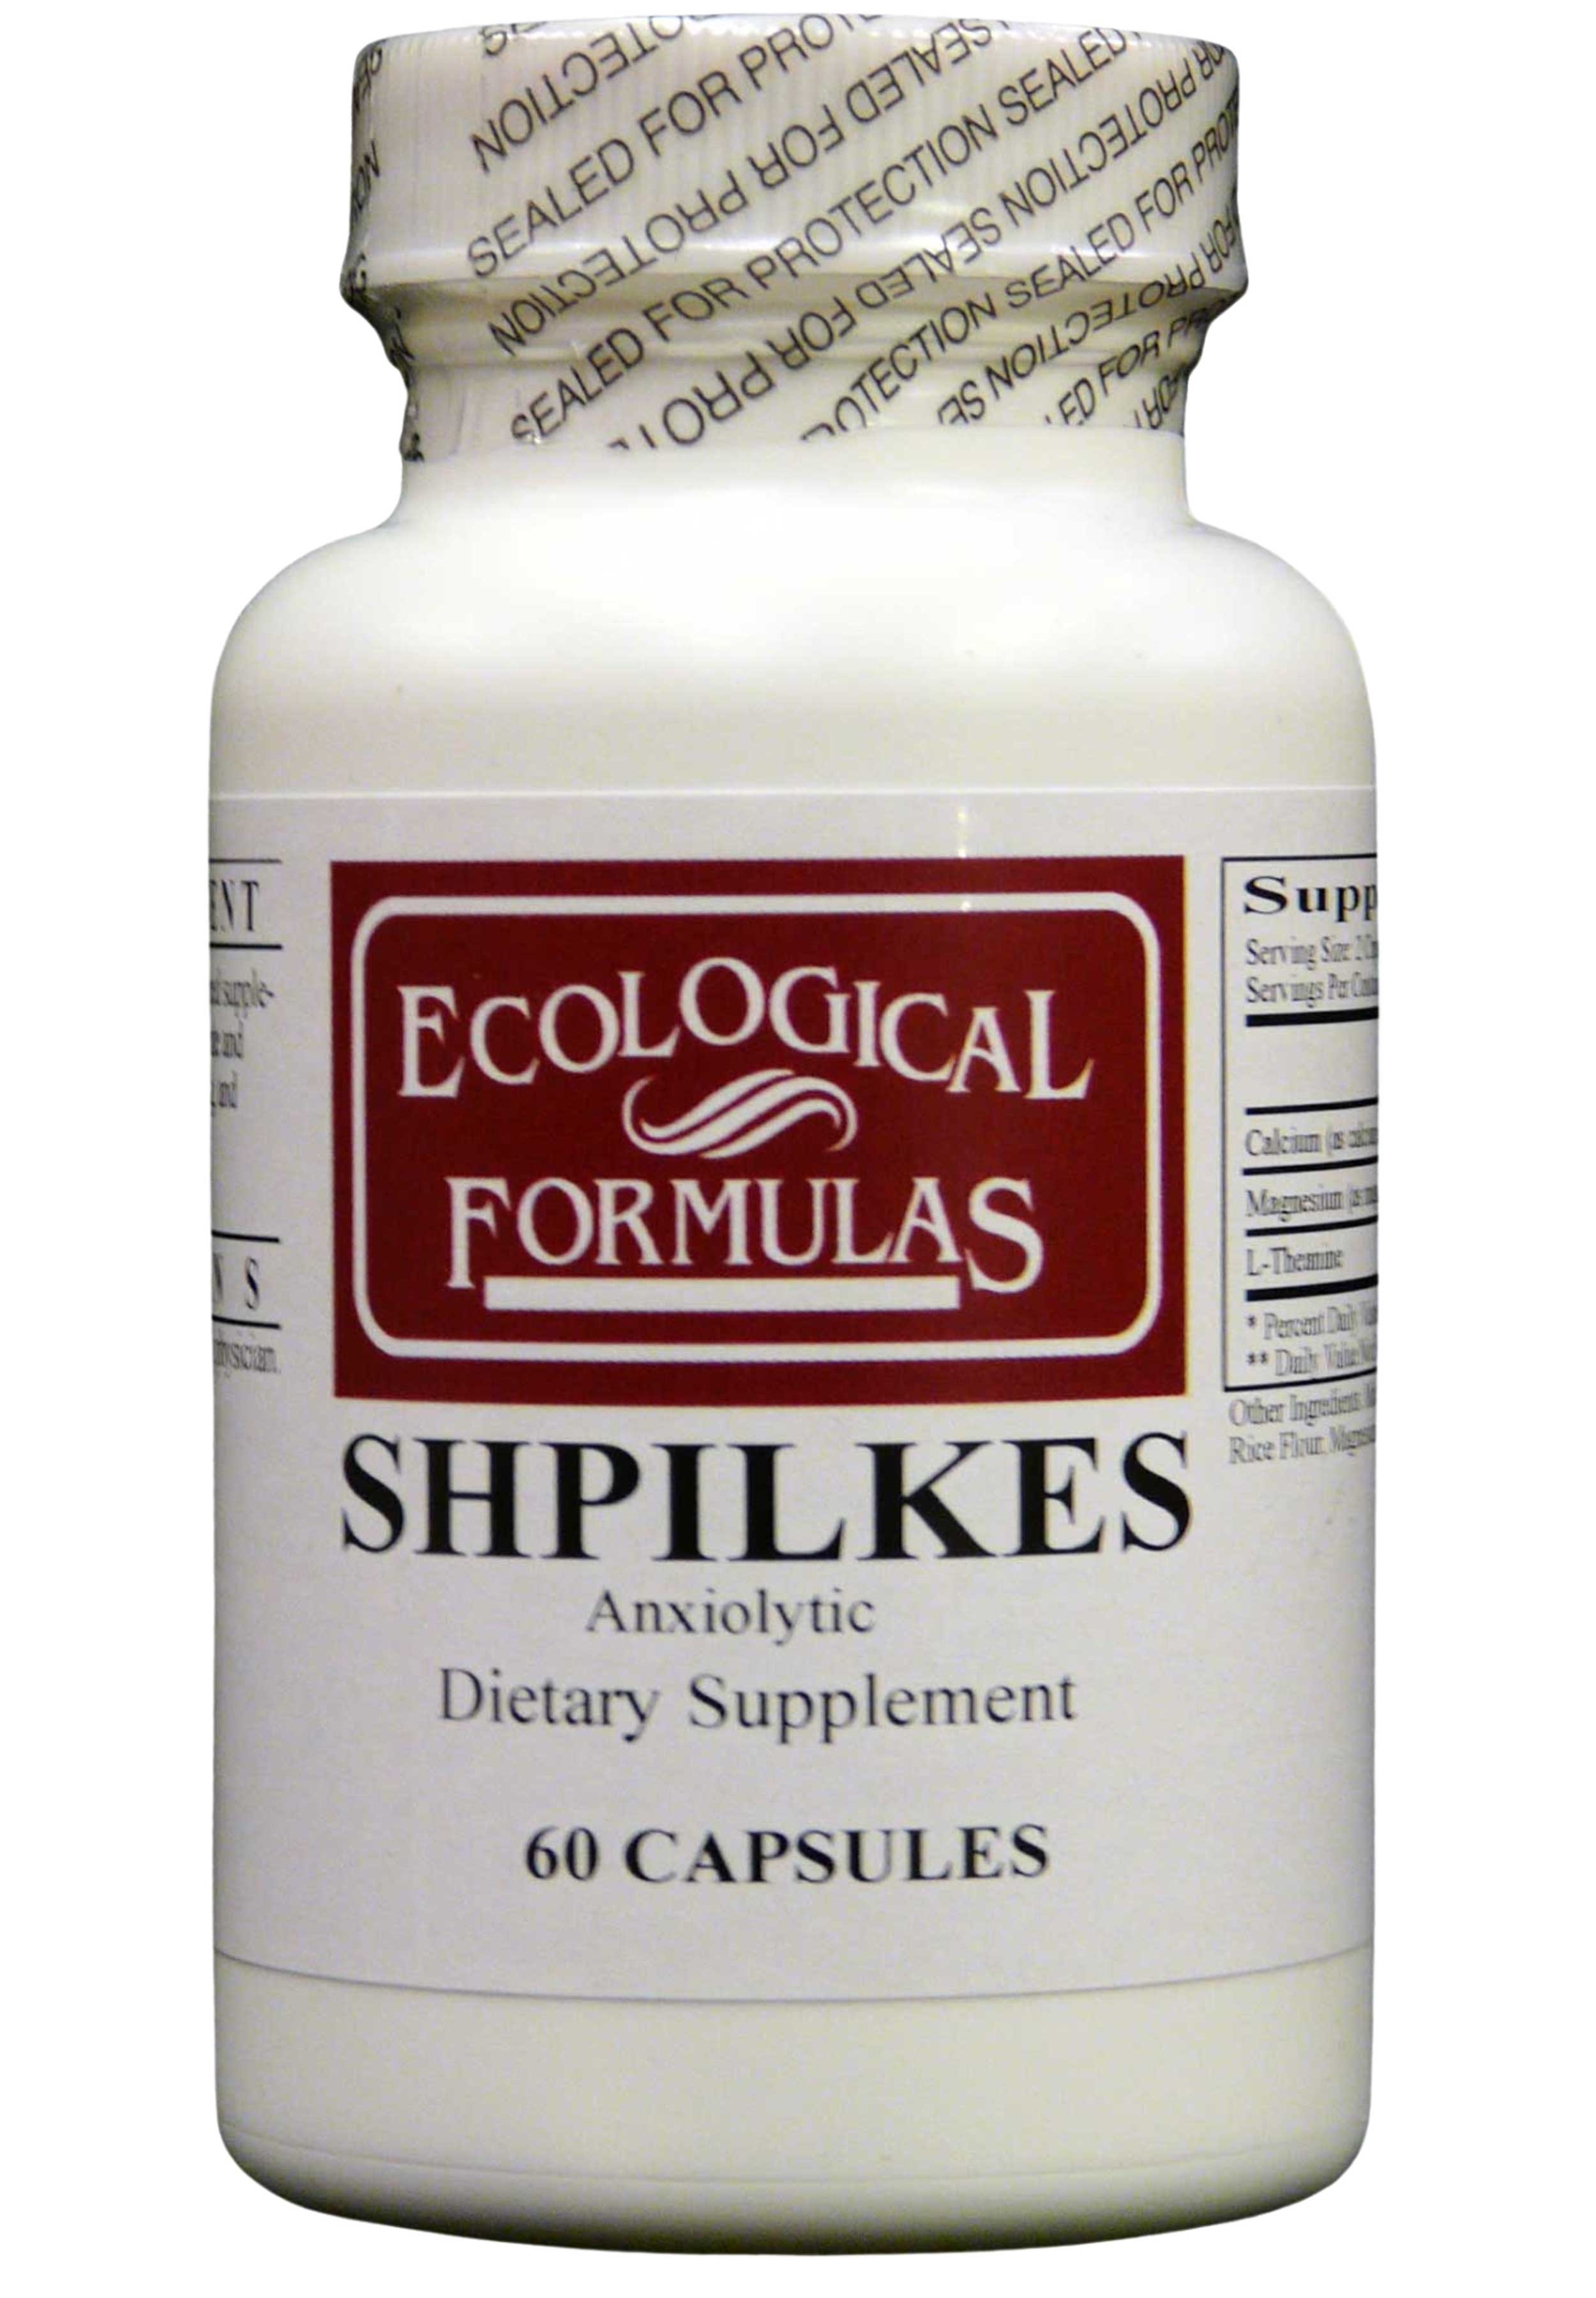 Ecological Formulas/Cardiovascular Research Shpilkes